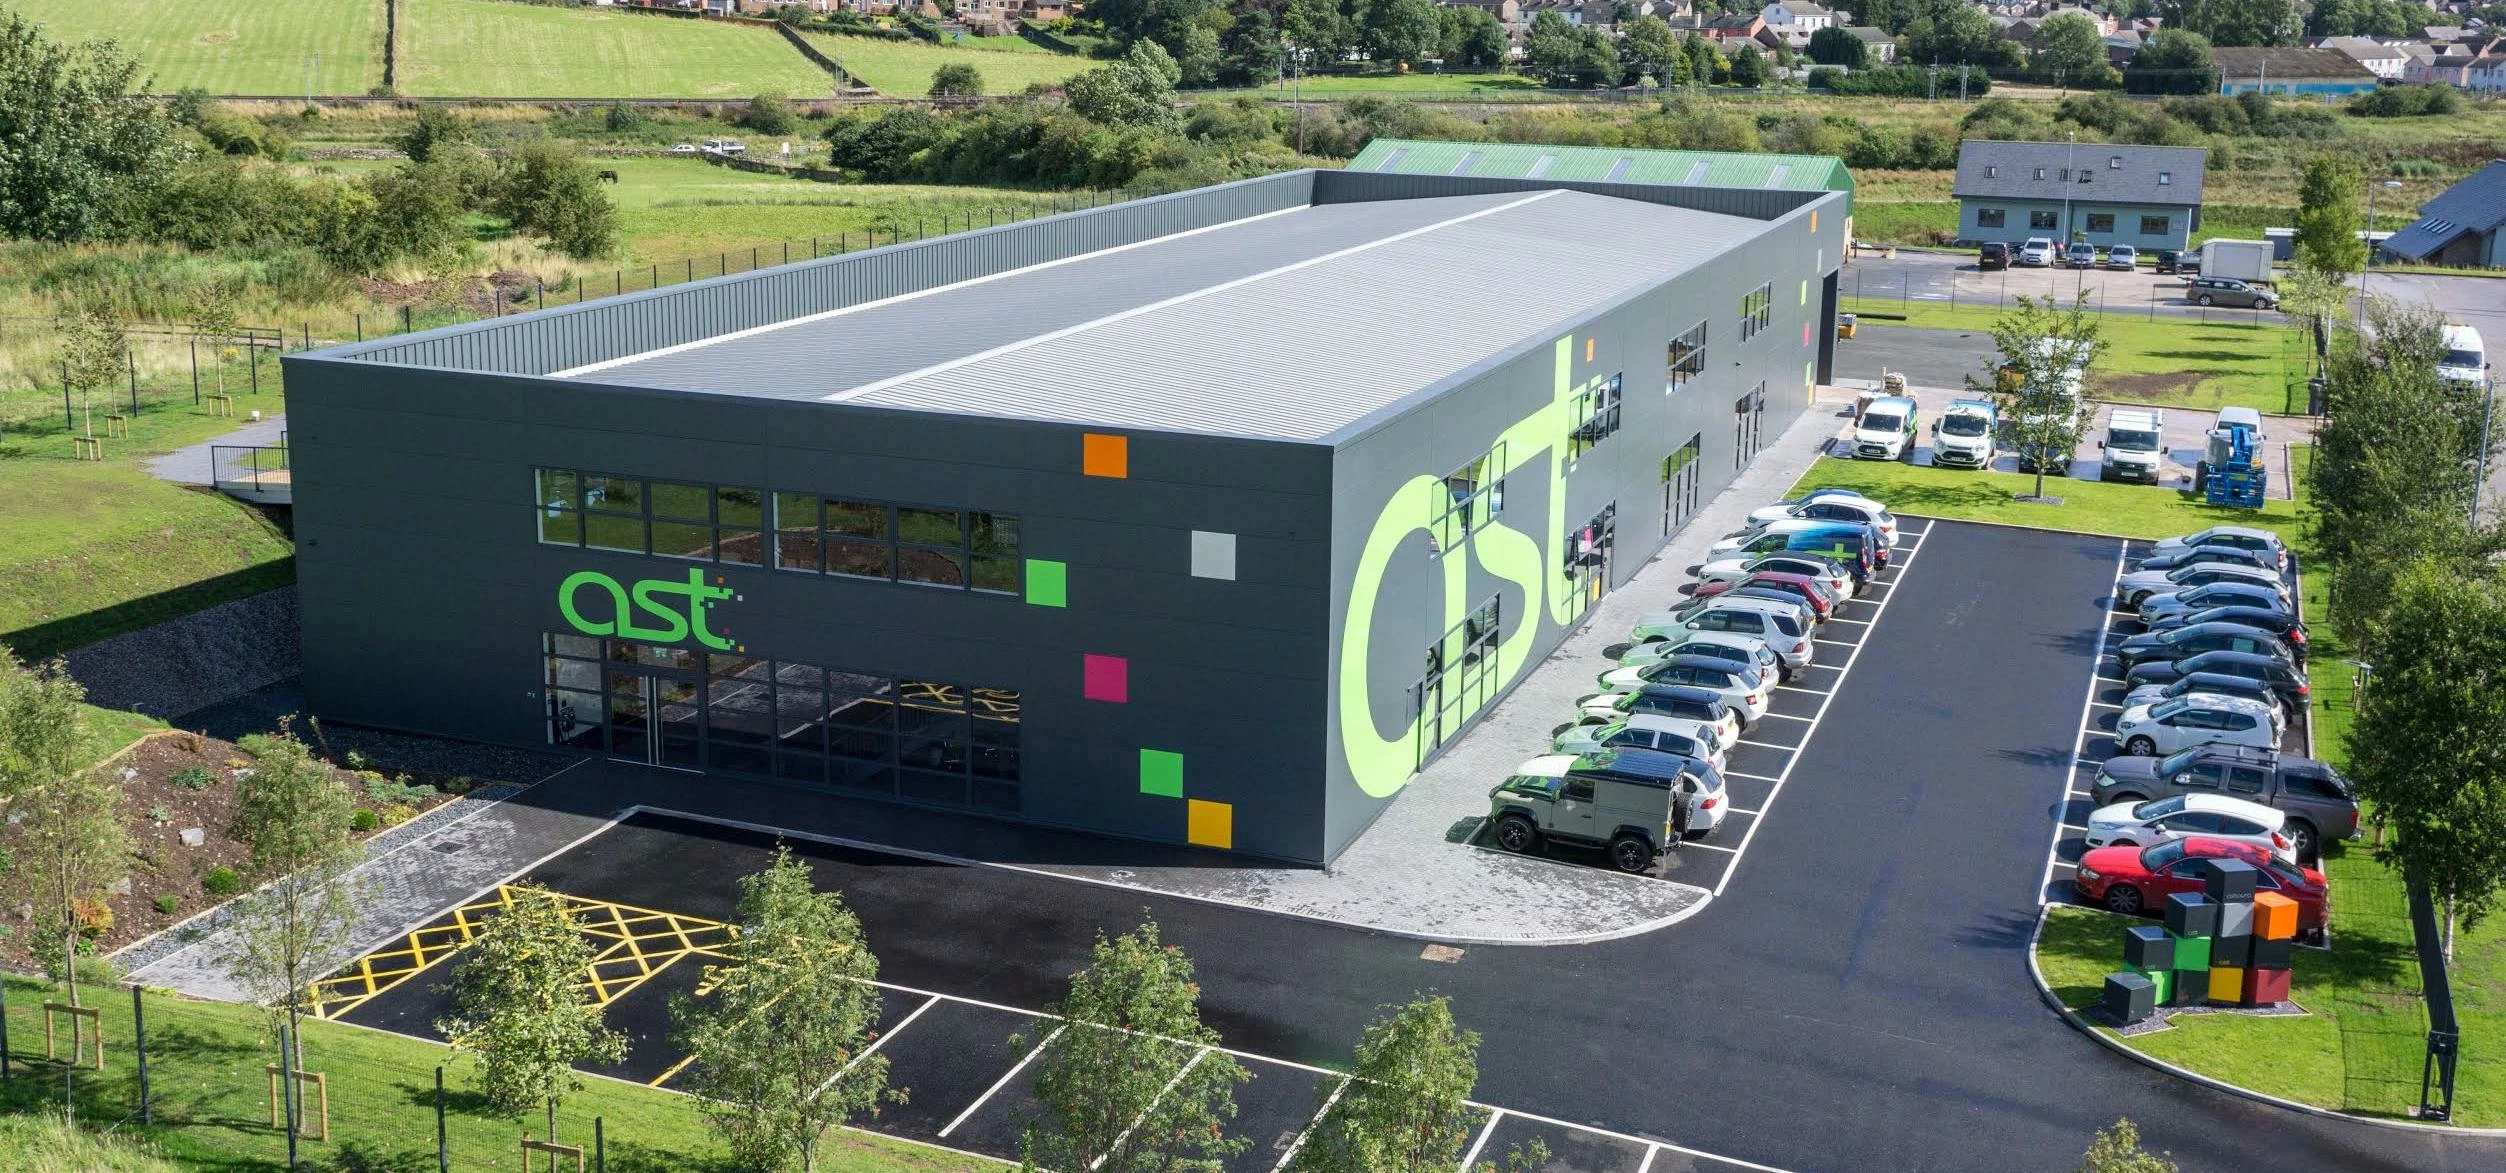 Ast Transport Branding's new £2.7m Cumbria HQ